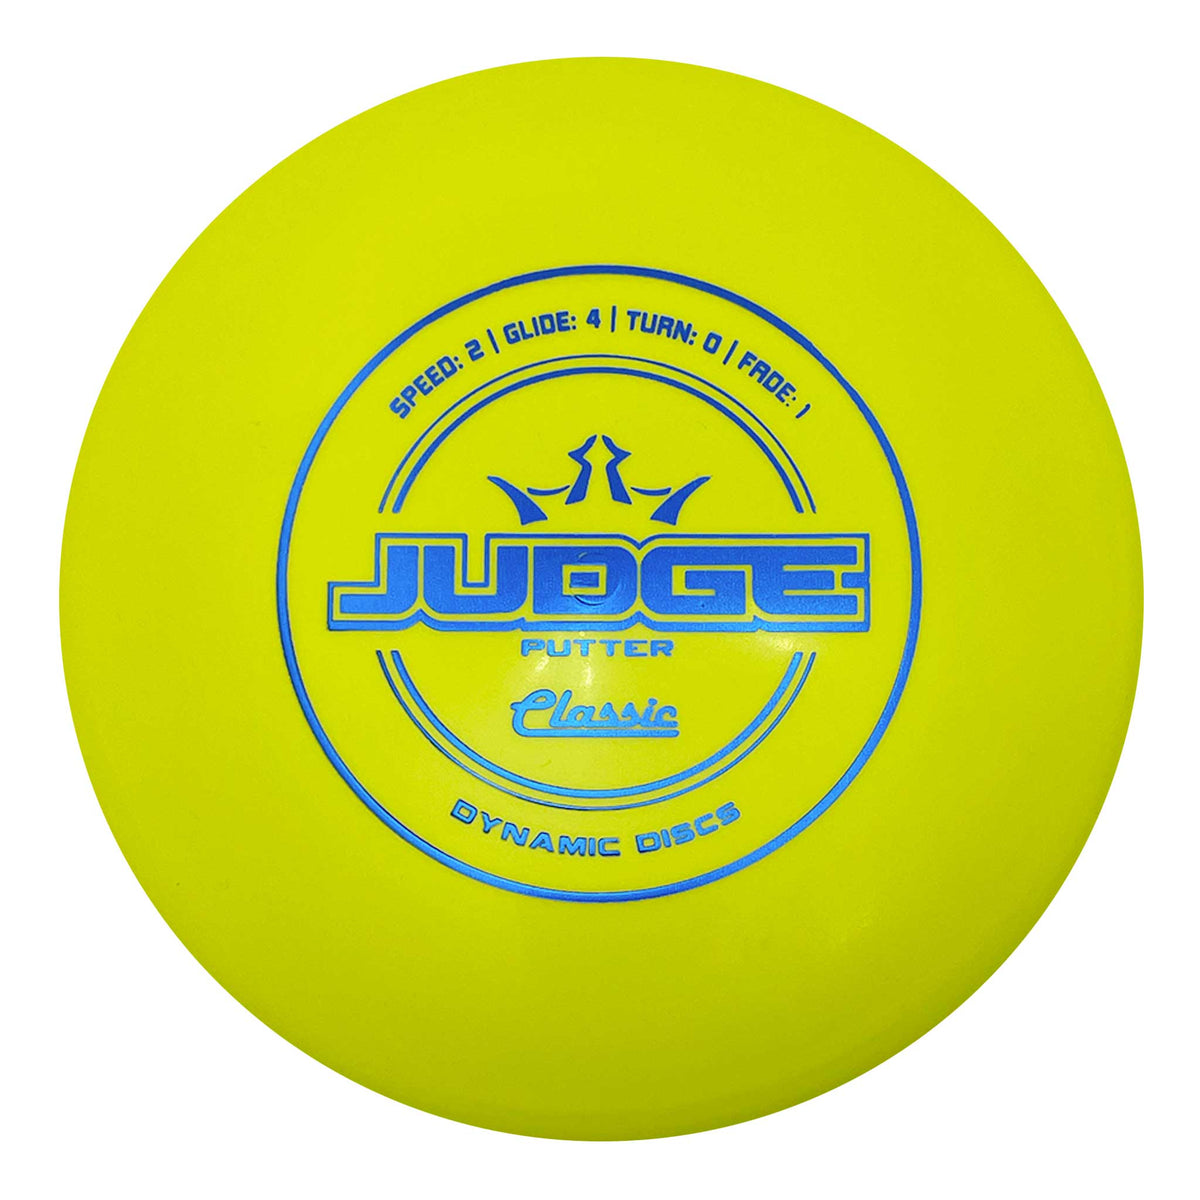 Dynamic Discs Classic Blend Judge putter - Yellow